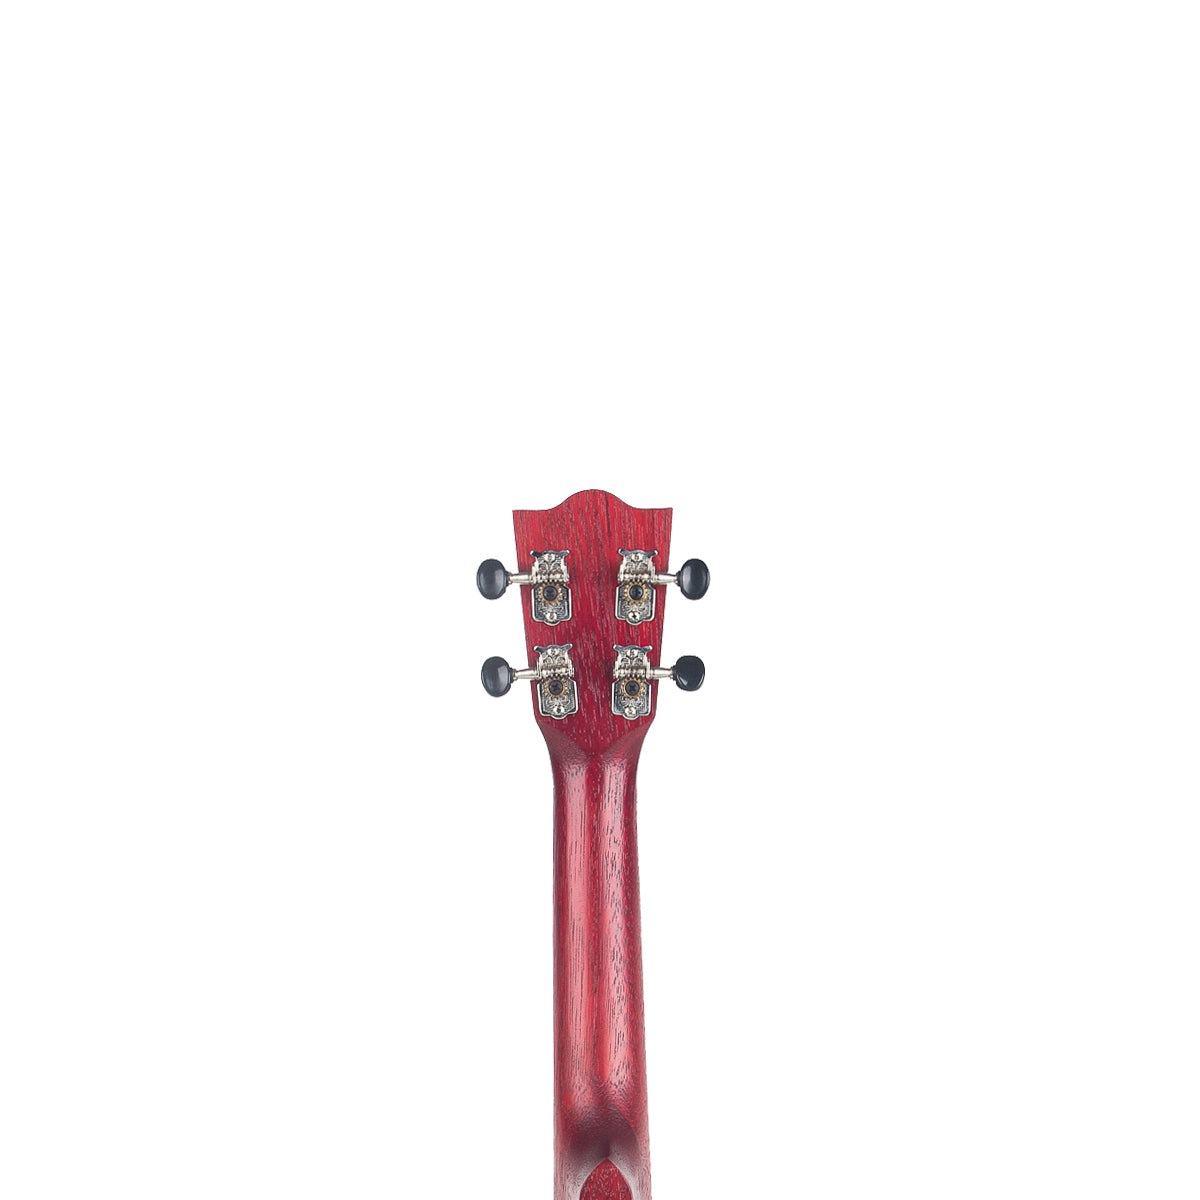 ukulele soprano premium mandalika red merah uk-21